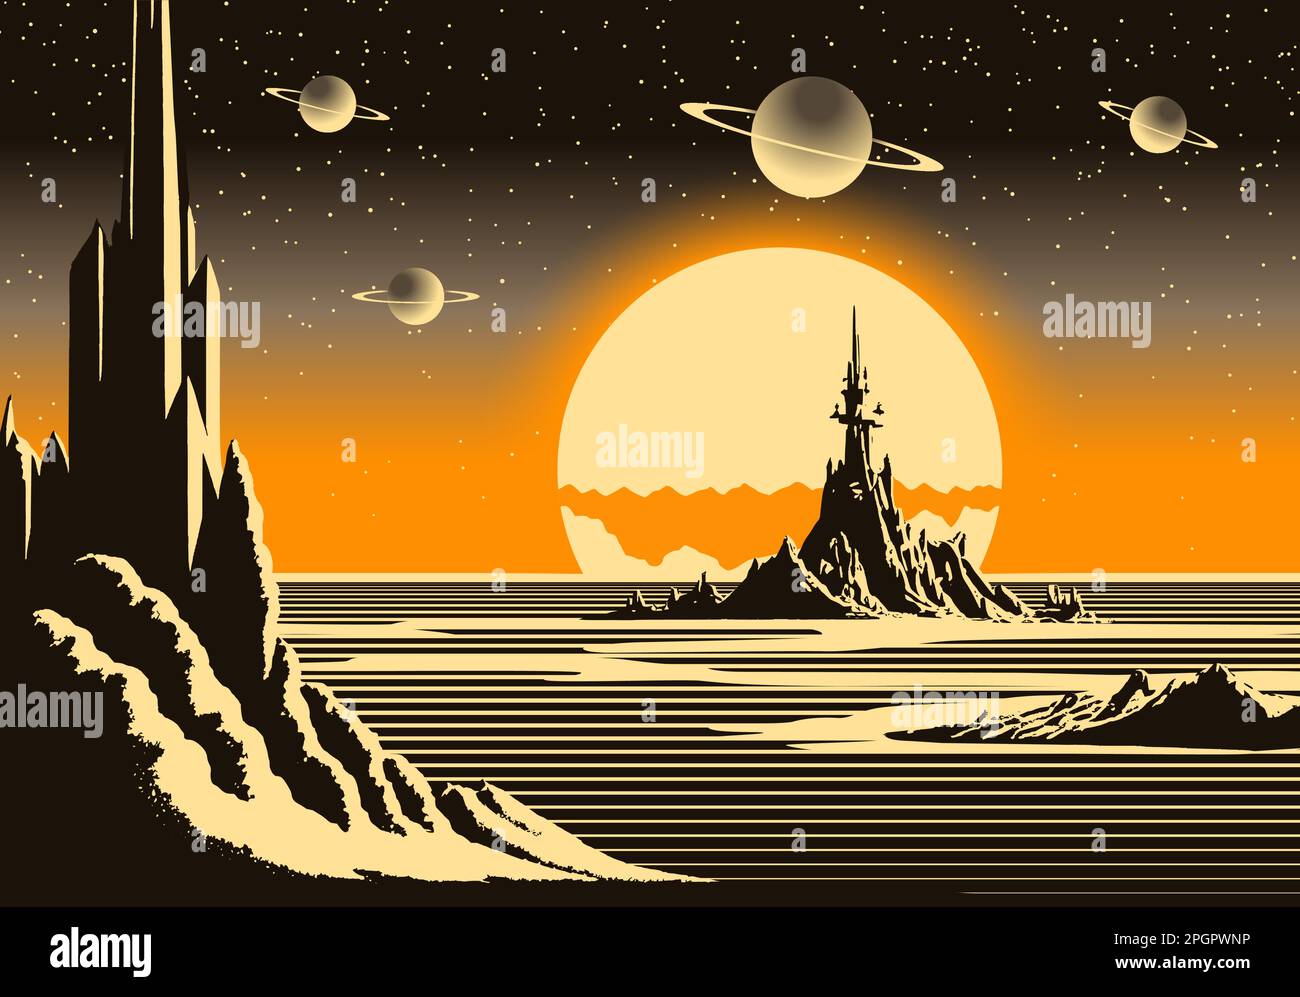 Landscape with mountains and sci-fi castle on far planet. Retro futuristic sunrise in 80s atomic era style. Stock Vector